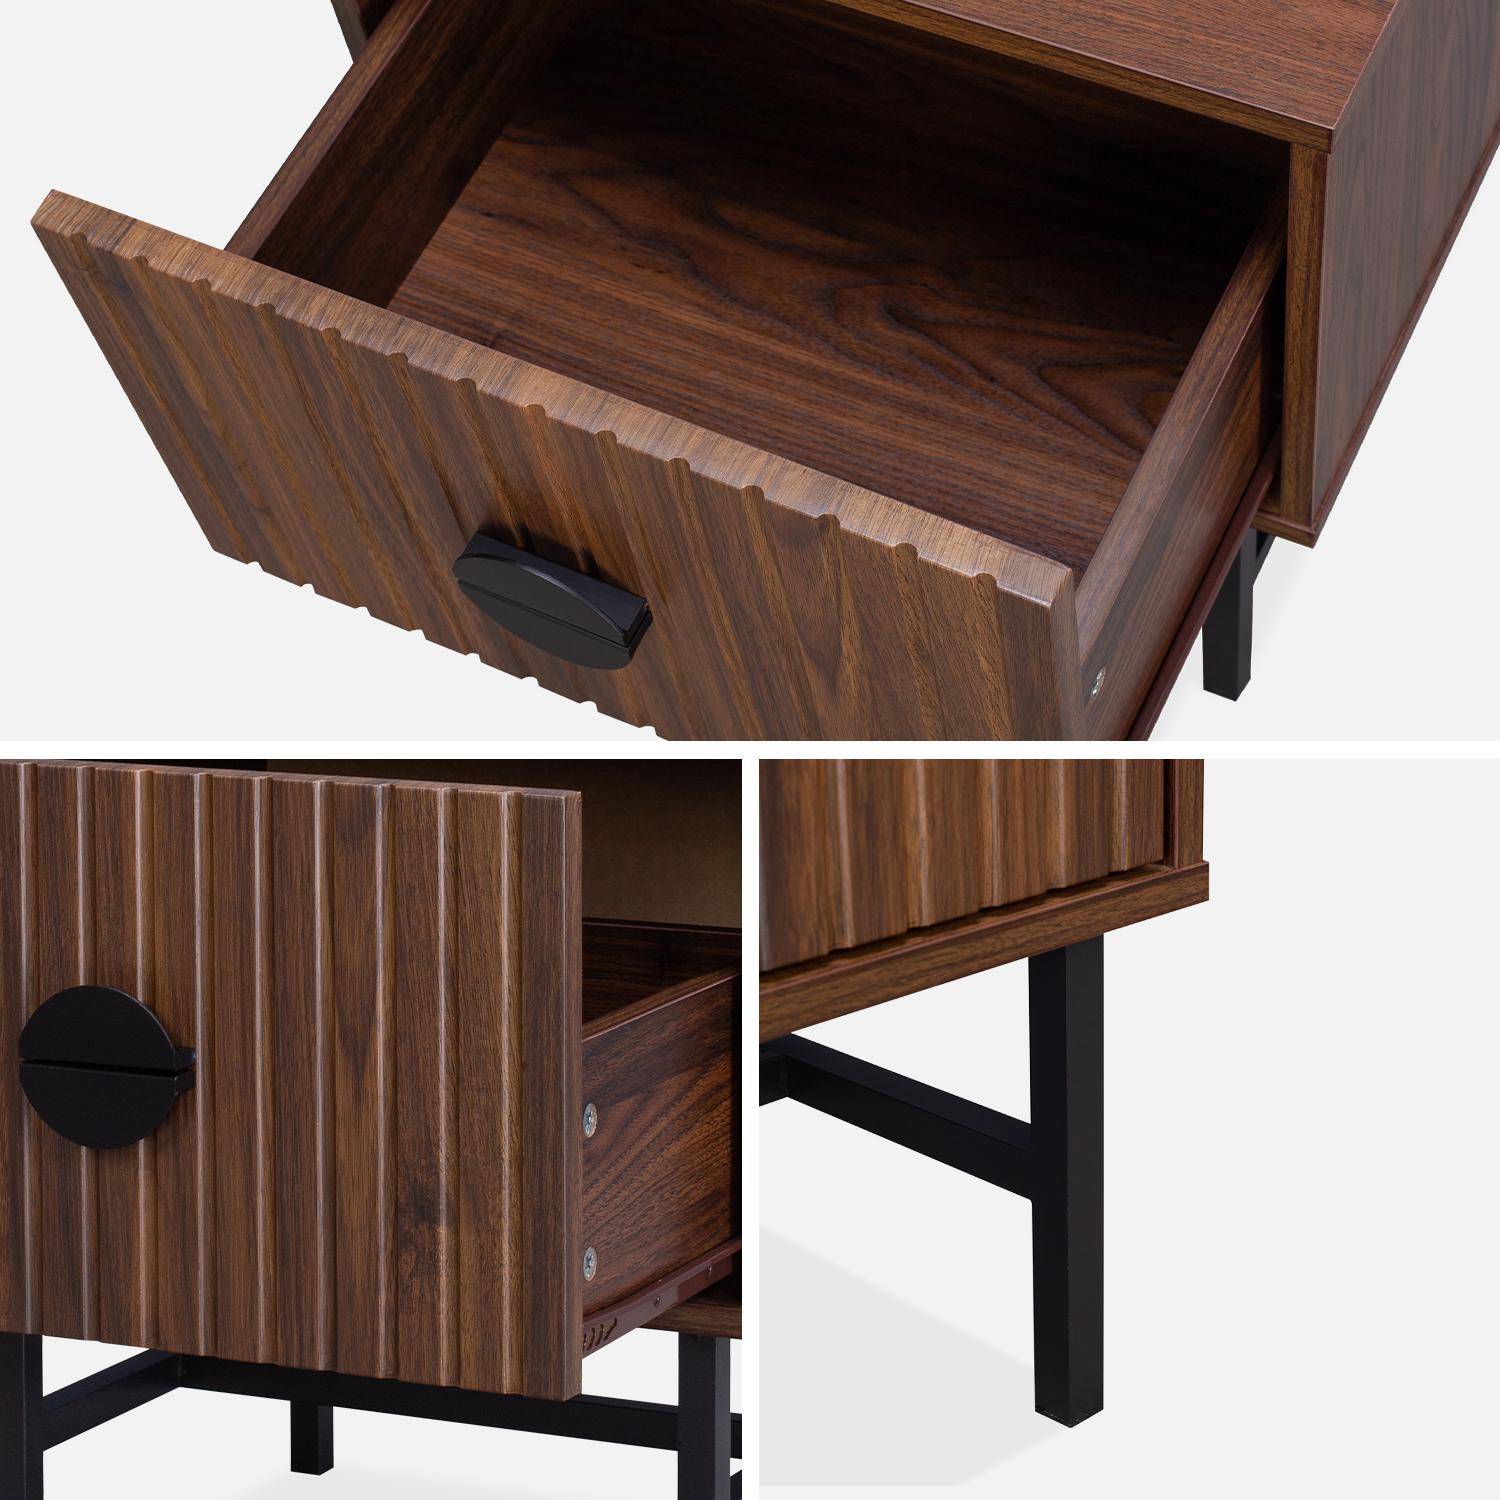 Set of 2 dark wood effect bedside tables, one drawer, L 48 x W 39 x H 50cm,sweeek,Photo7